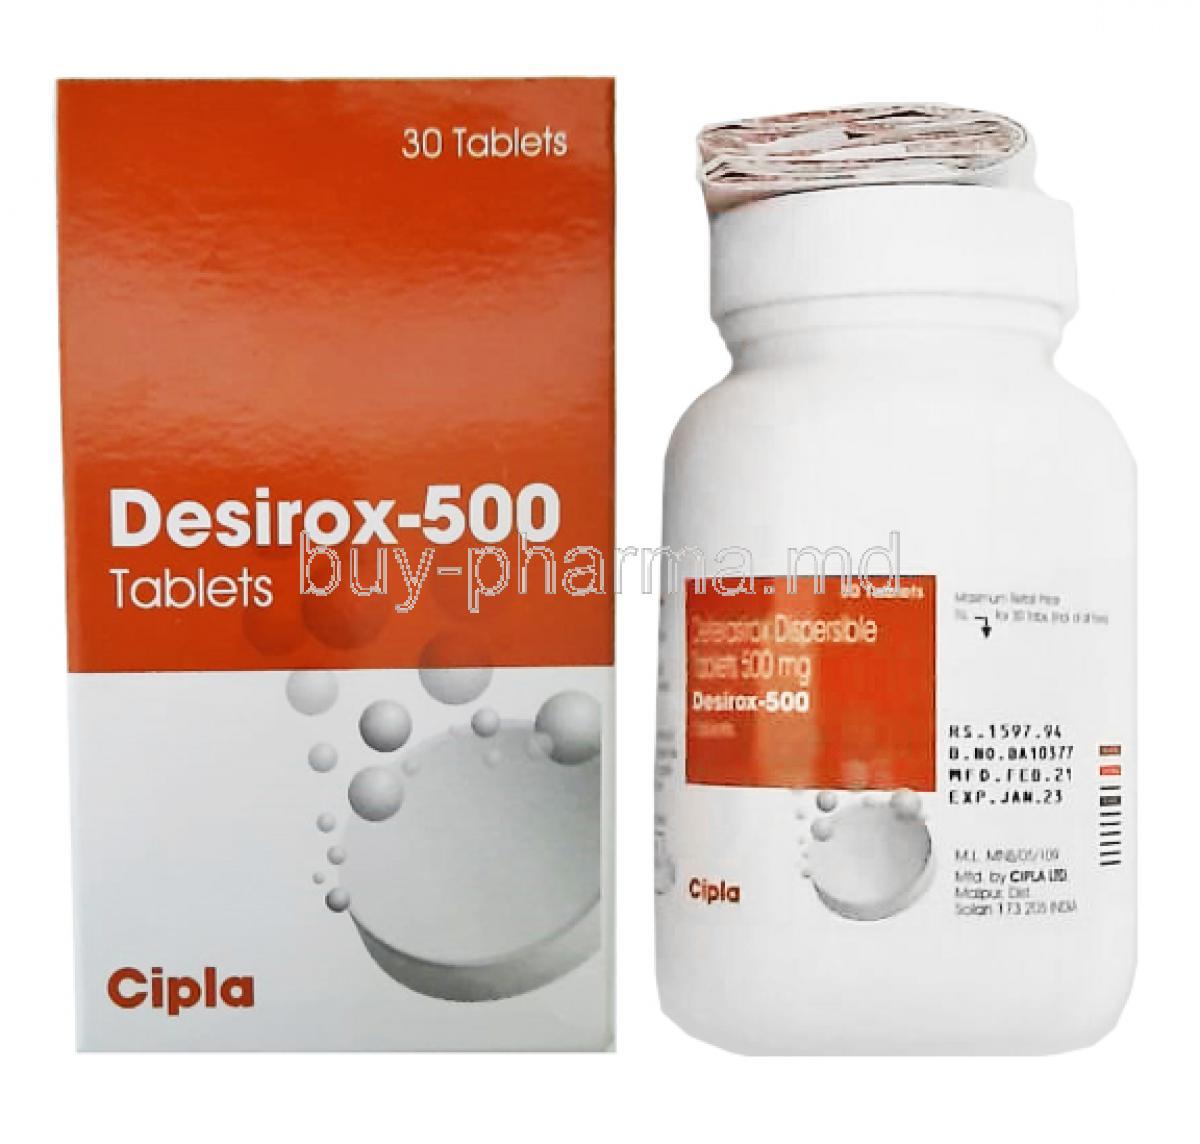 Desirox, Deferasirox 500 mg box, bottle and leaflet